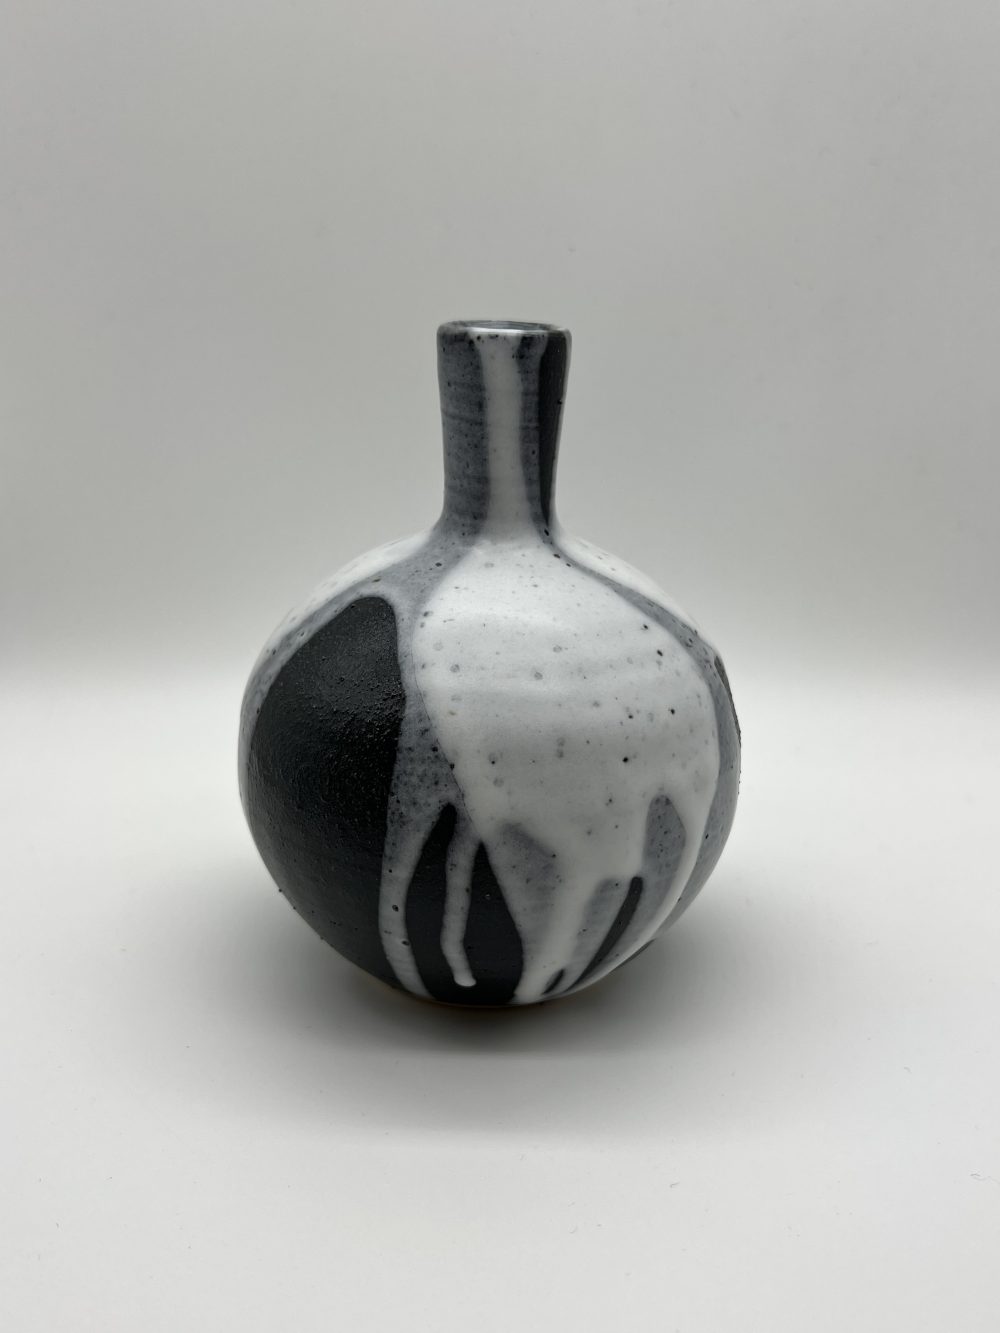 Poured Black and White Vase, stoneware vase by Illyria Pottery